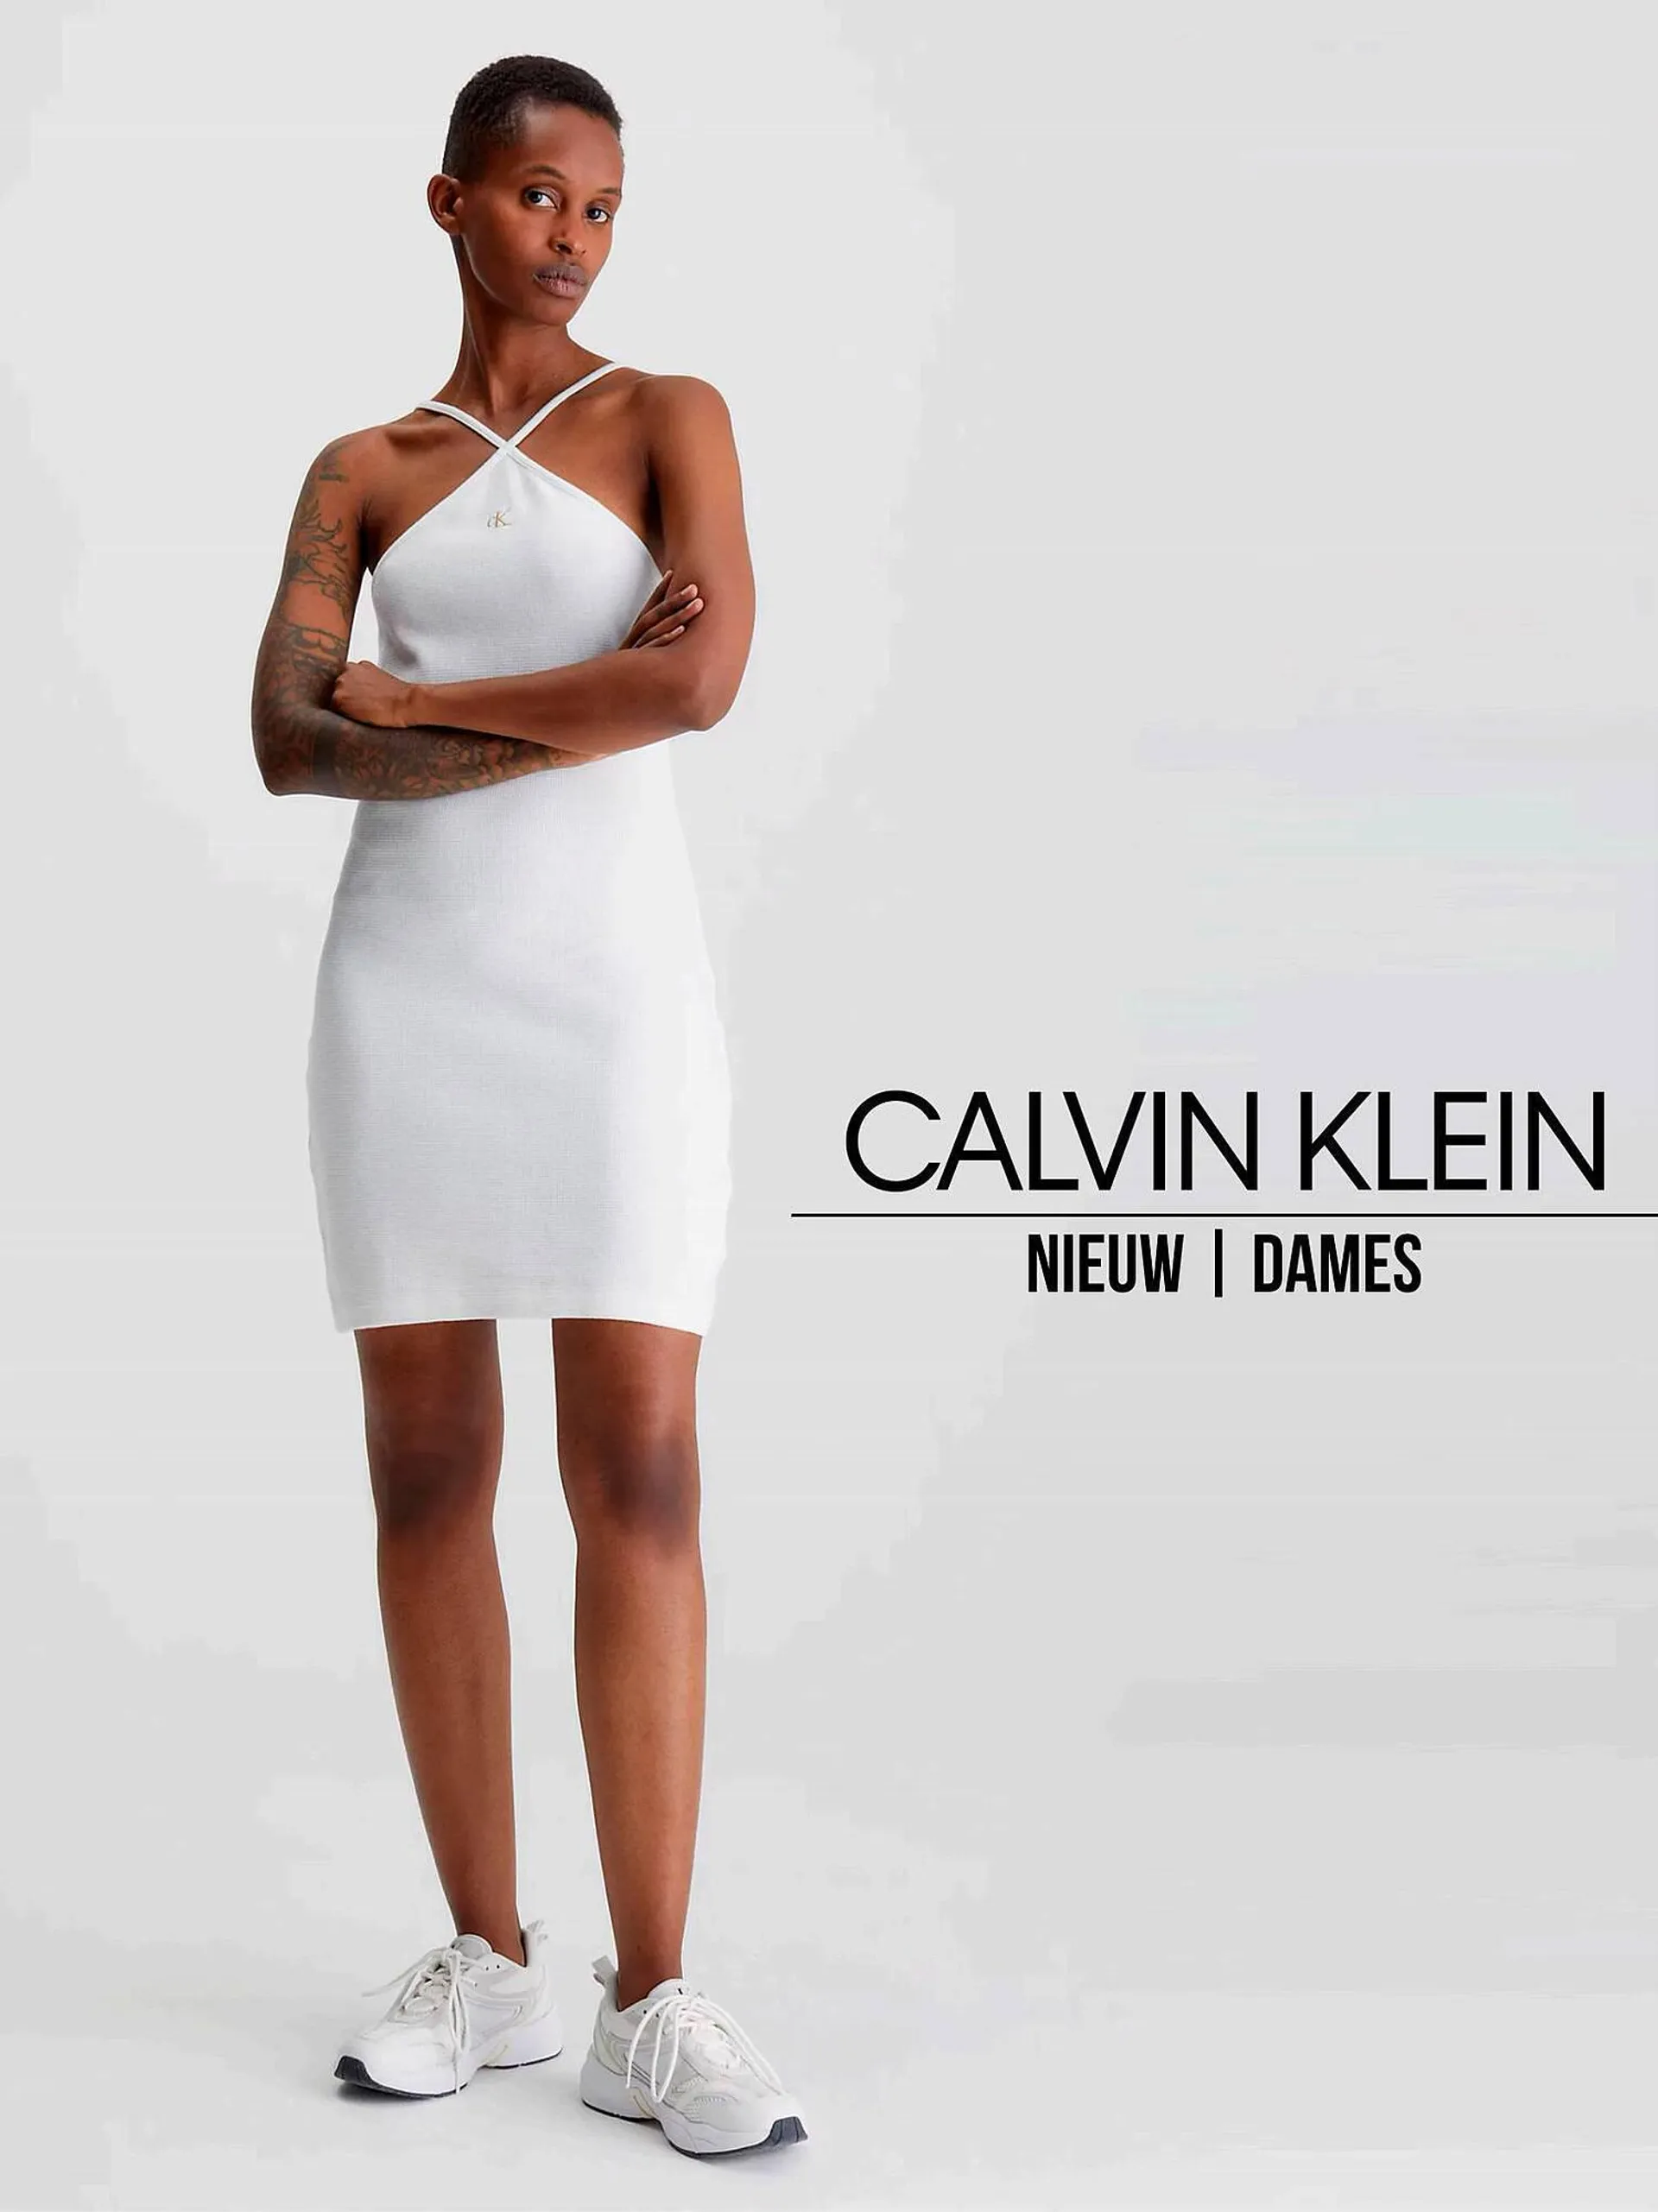 Calvin Klein Folder - 1